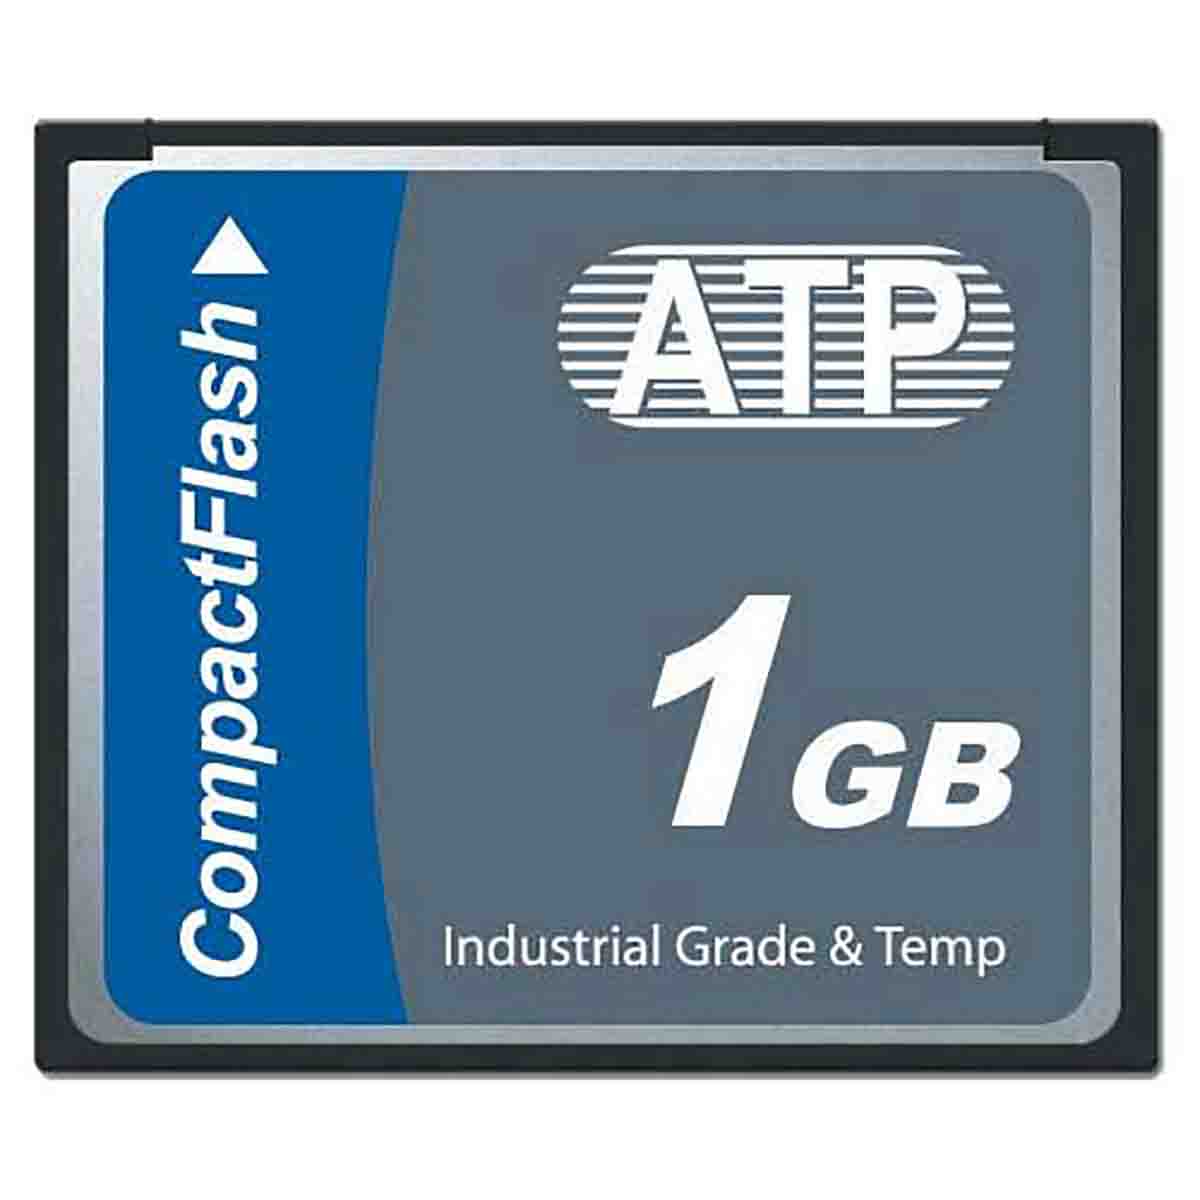 ATP L800Pi CompactFlash Industrial 1 GB SLC Compact Flash Card